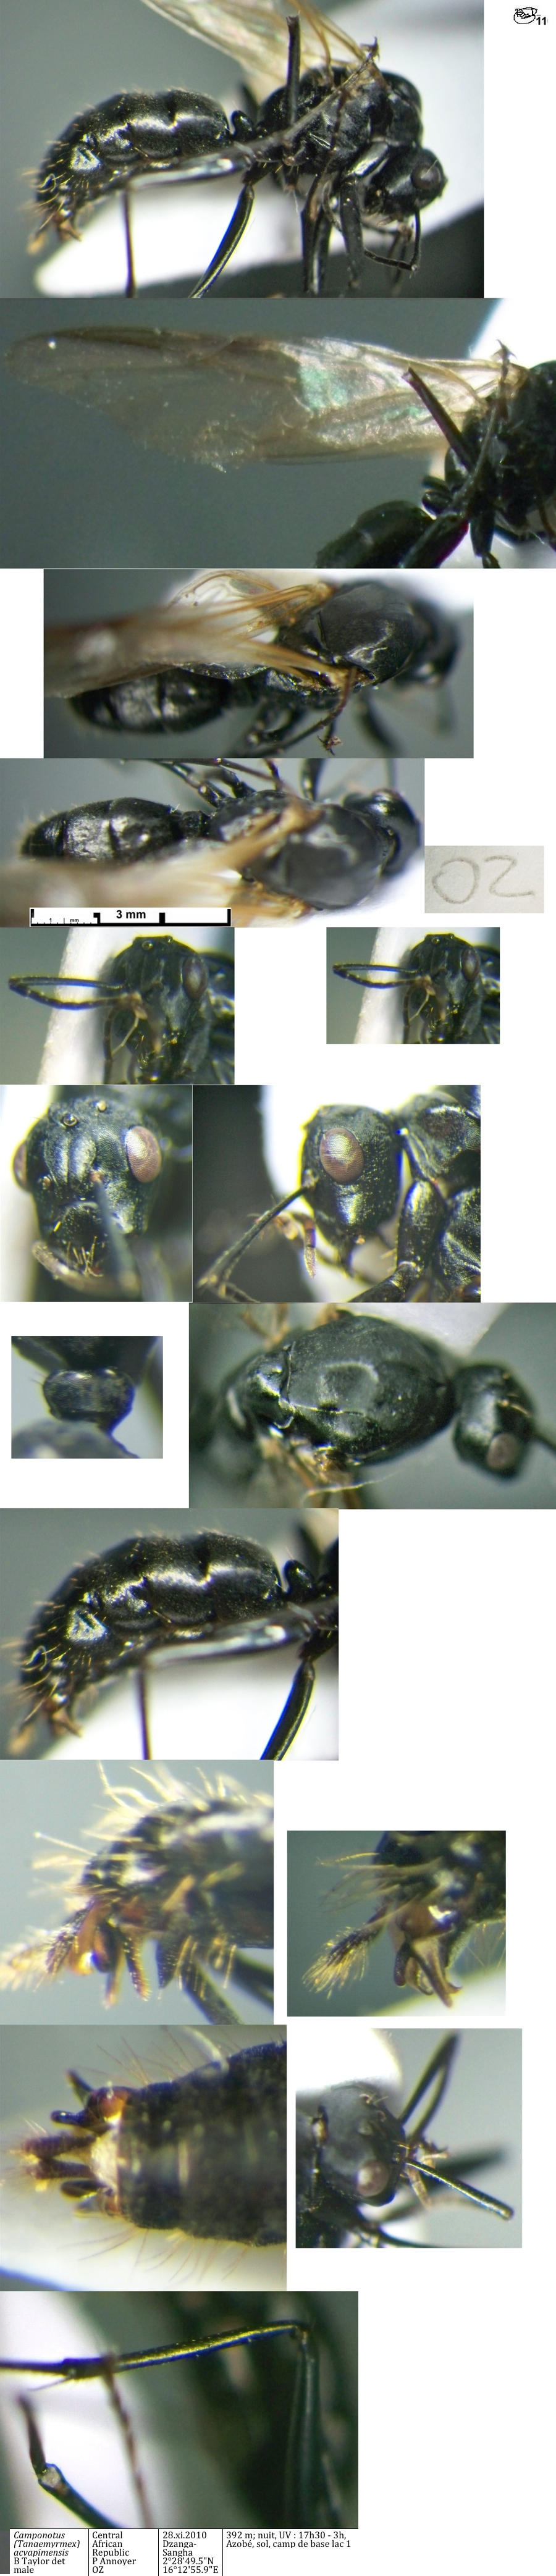 {Camponotus acvapimensis male}